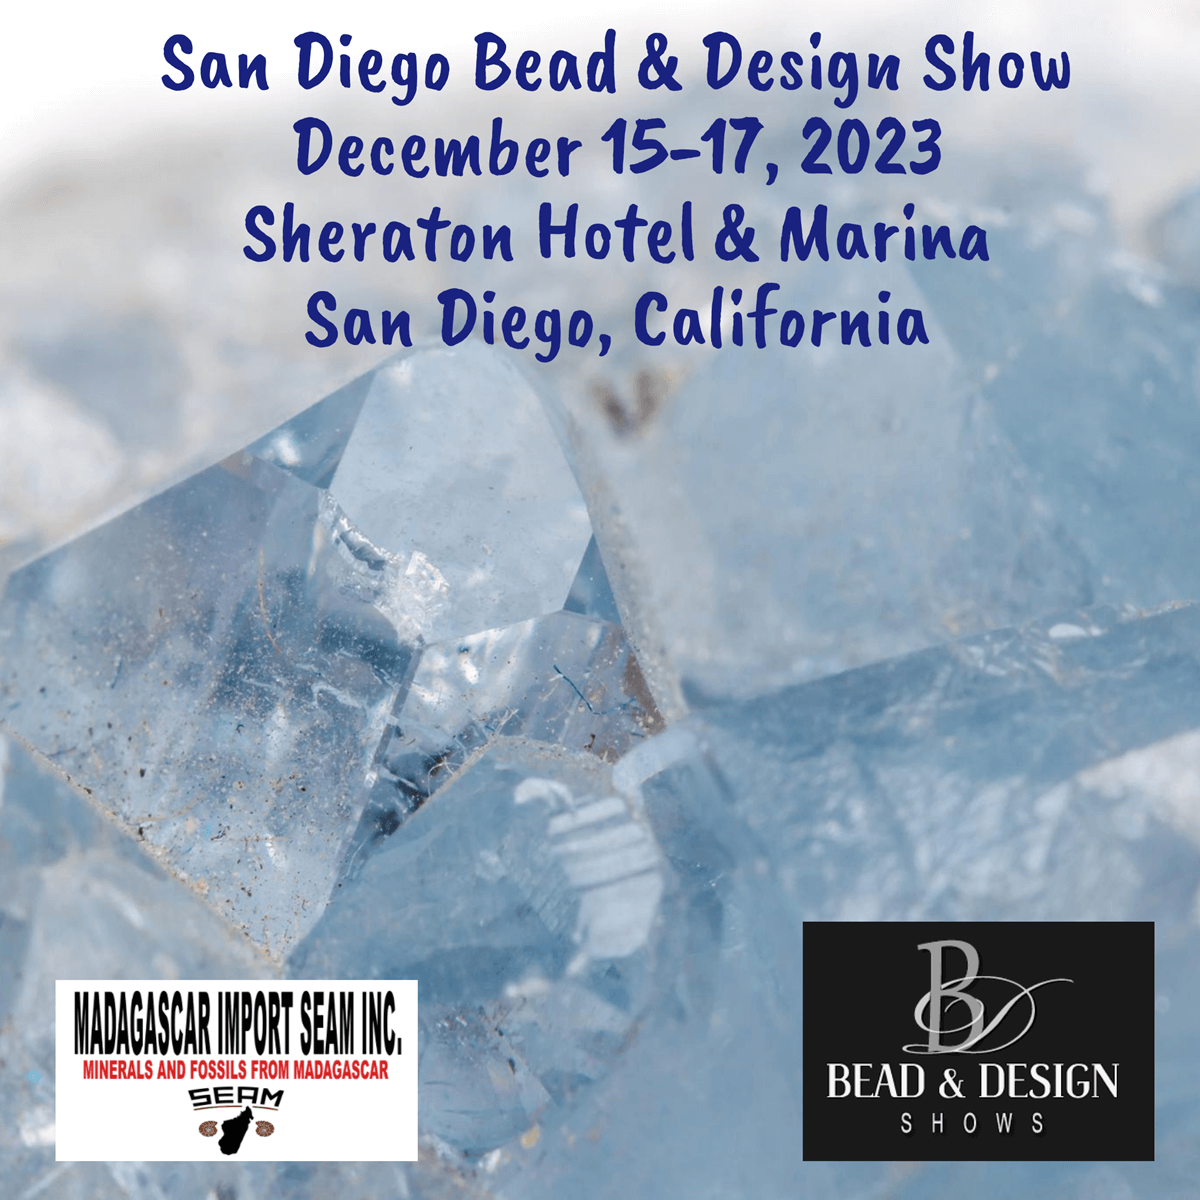 San Diego Bead & Design Show 2023